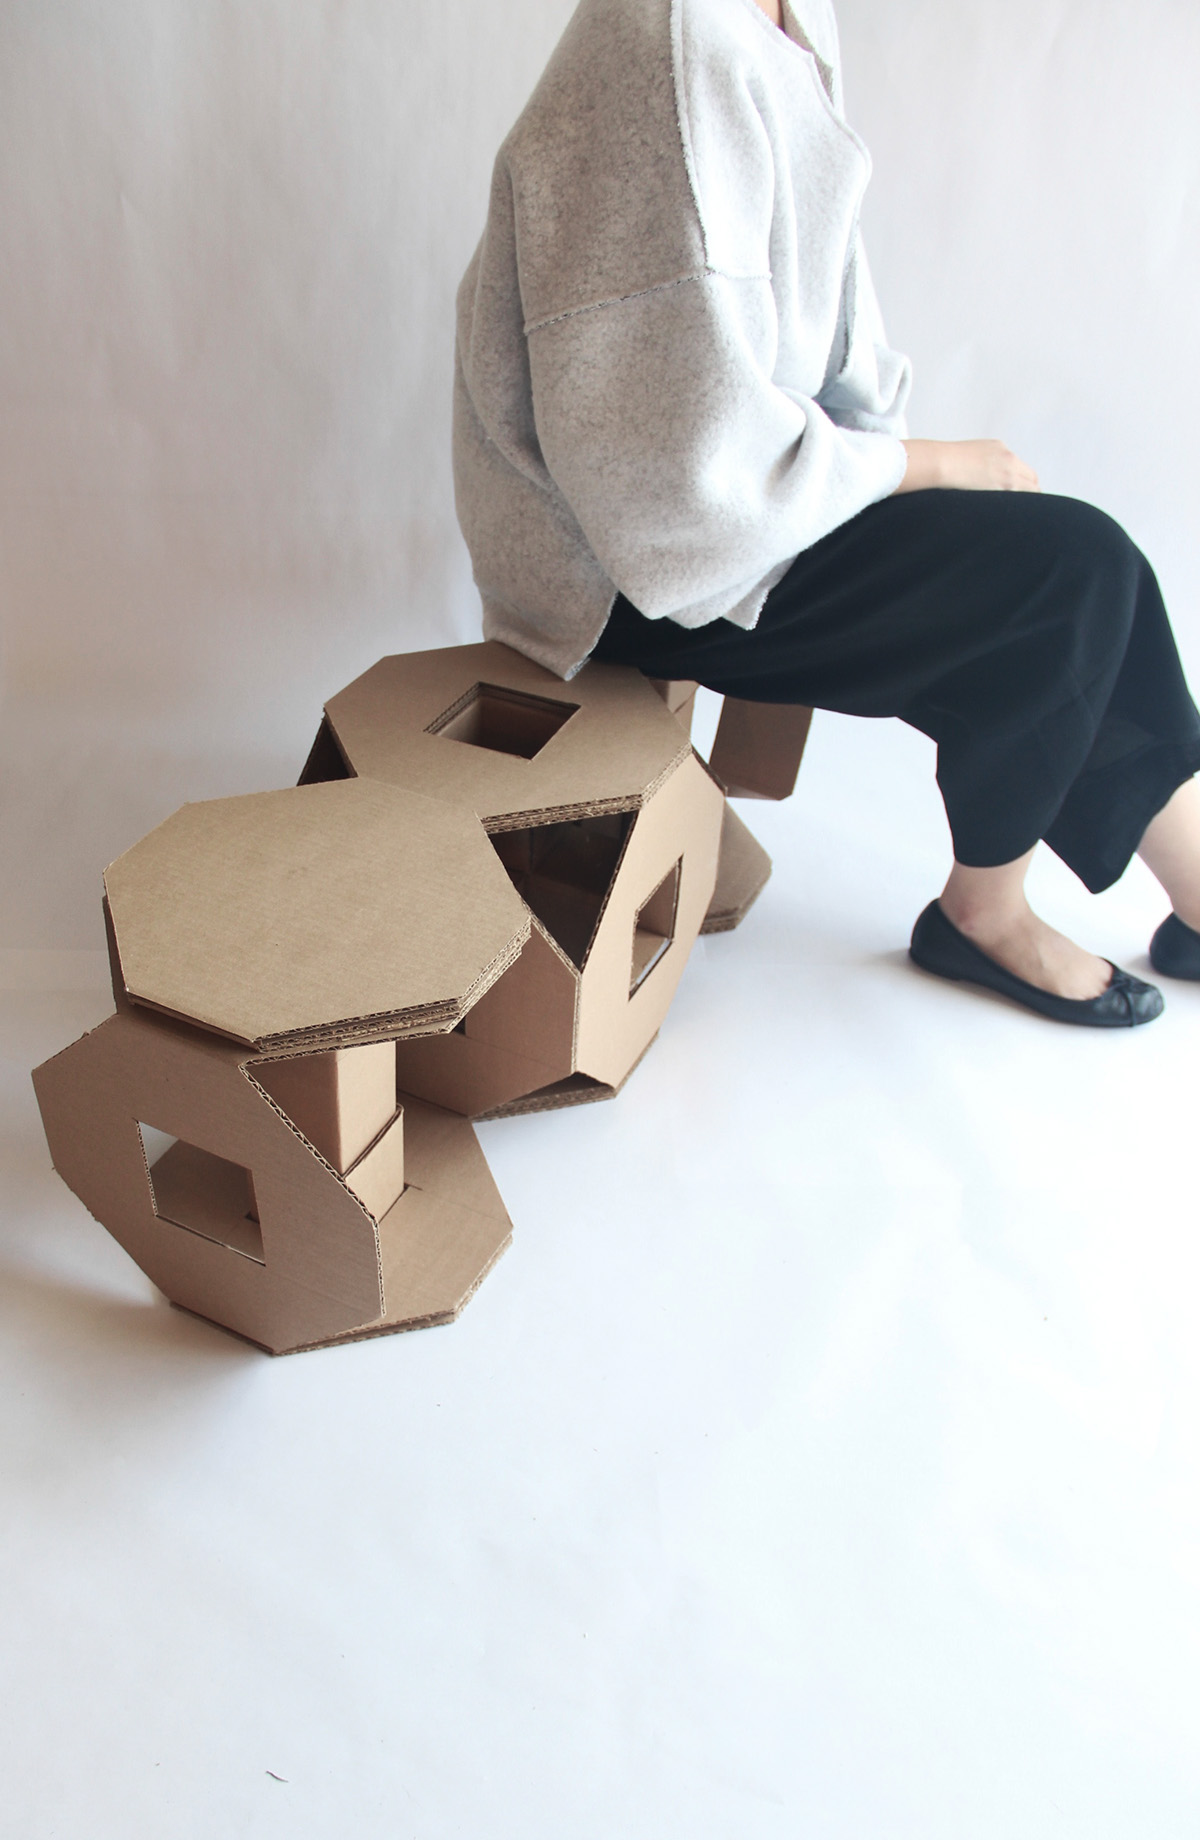 modular cardboard chair cardboard chair modular modules furniture reconfigurable furniture